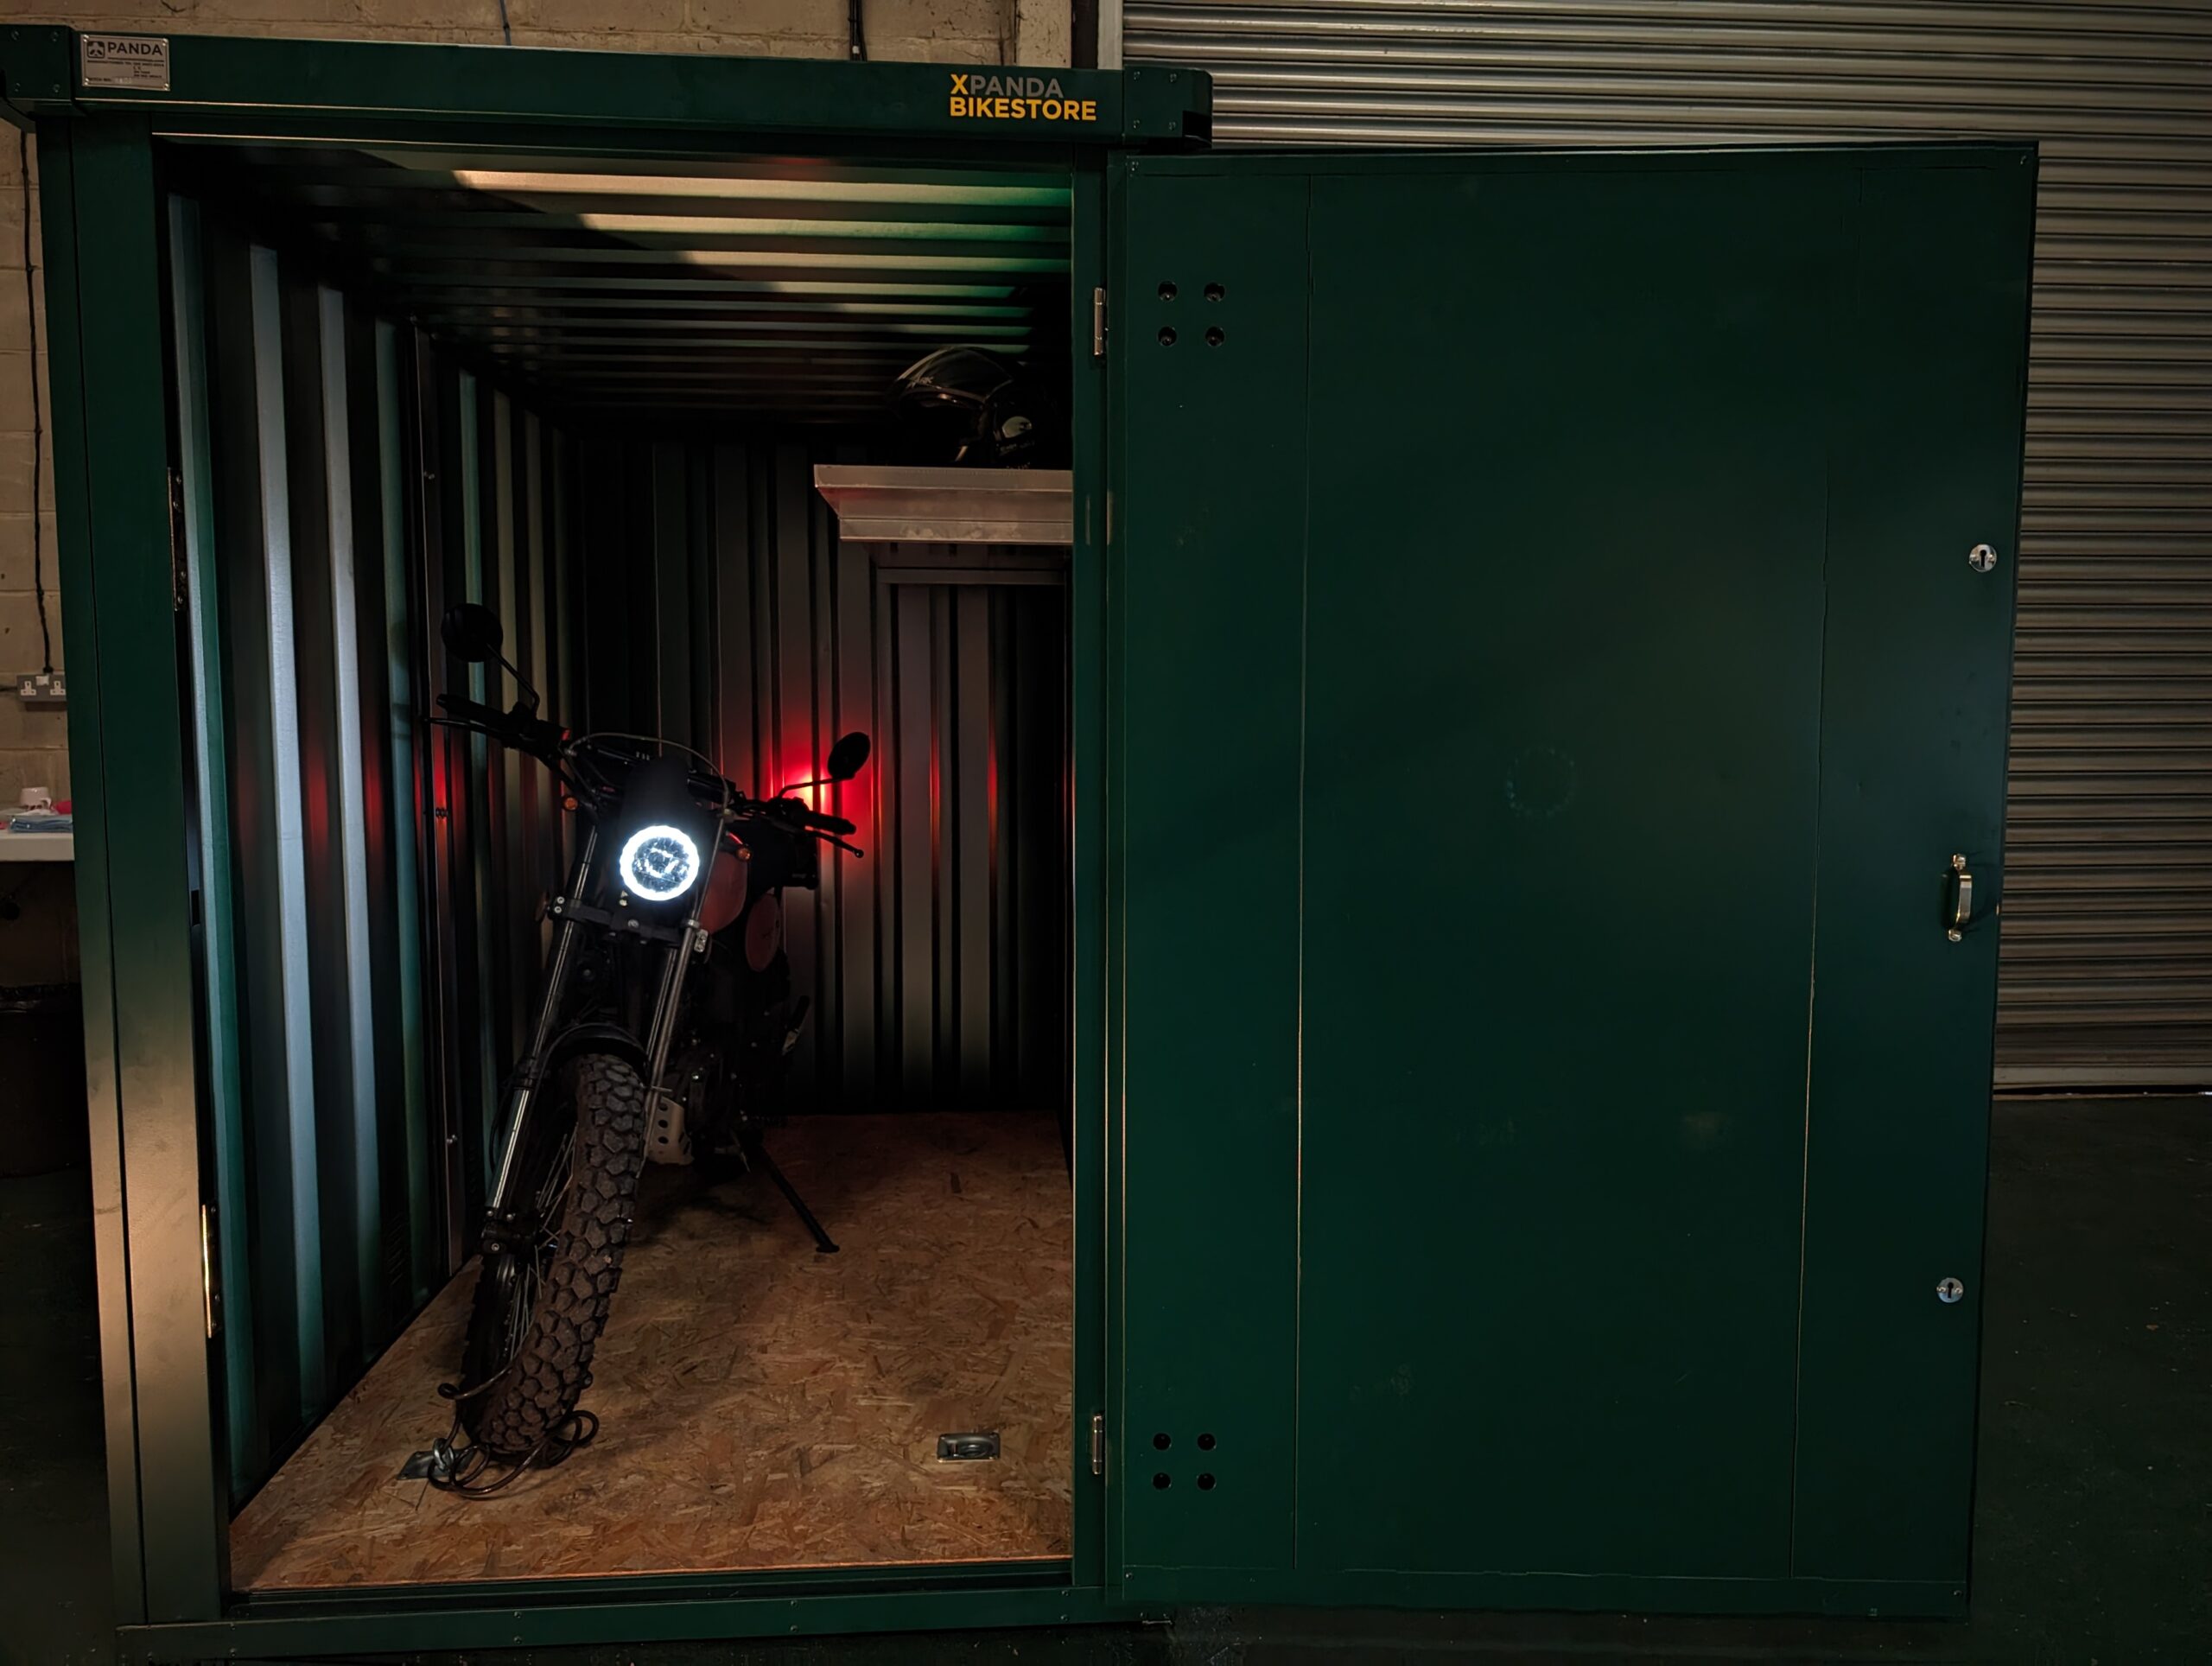 Indoor Bike Storage With Xpanda Bikestore